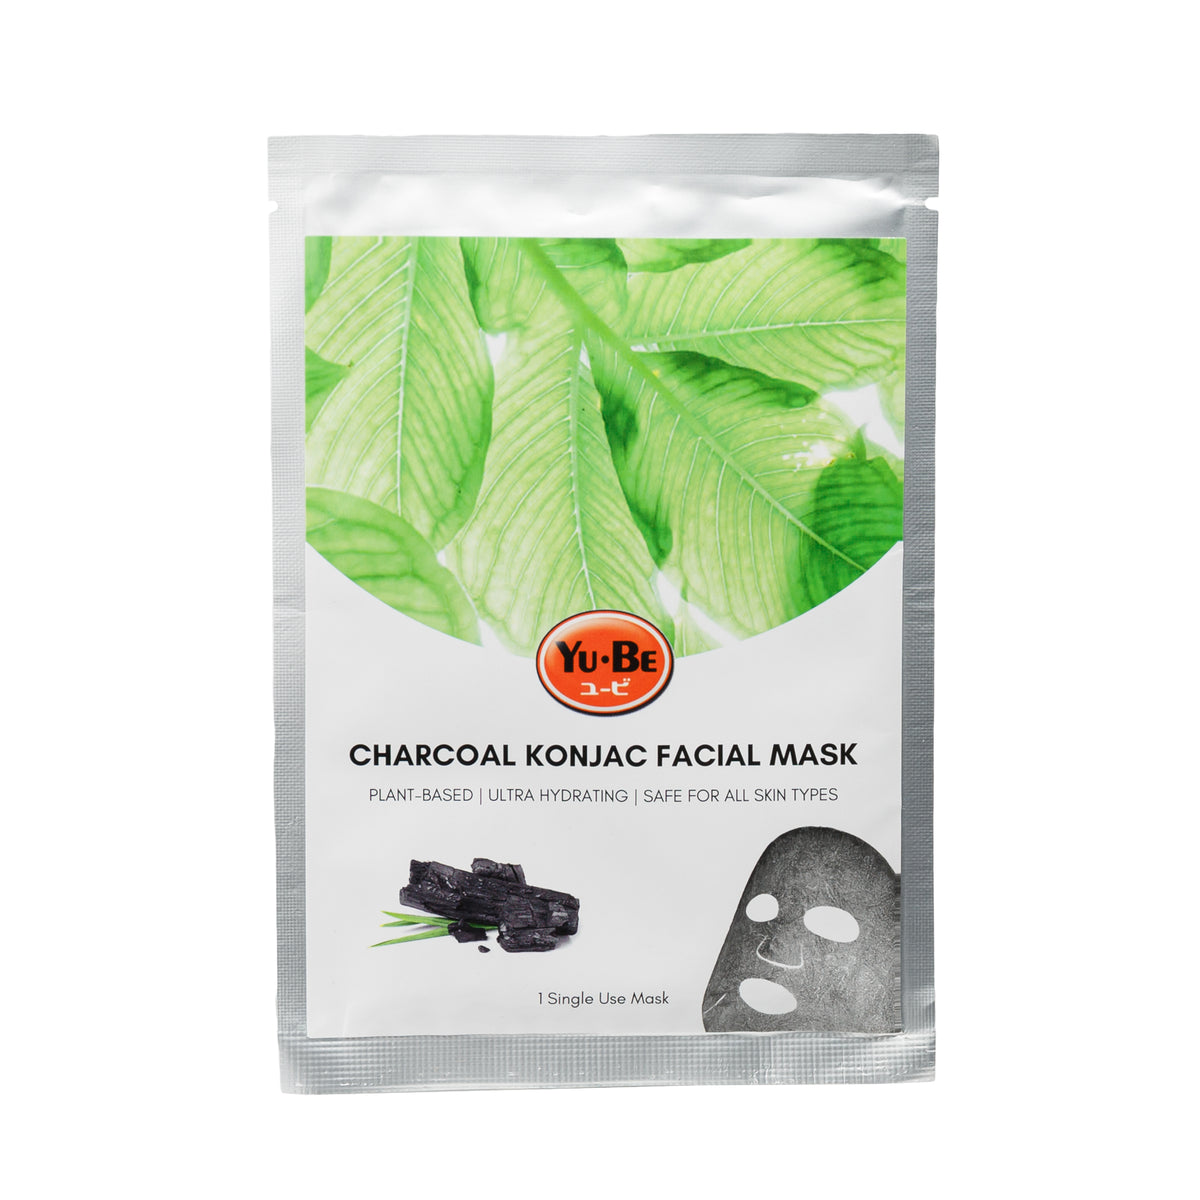 Primary Image of Charcoal Konjac Facial Mask